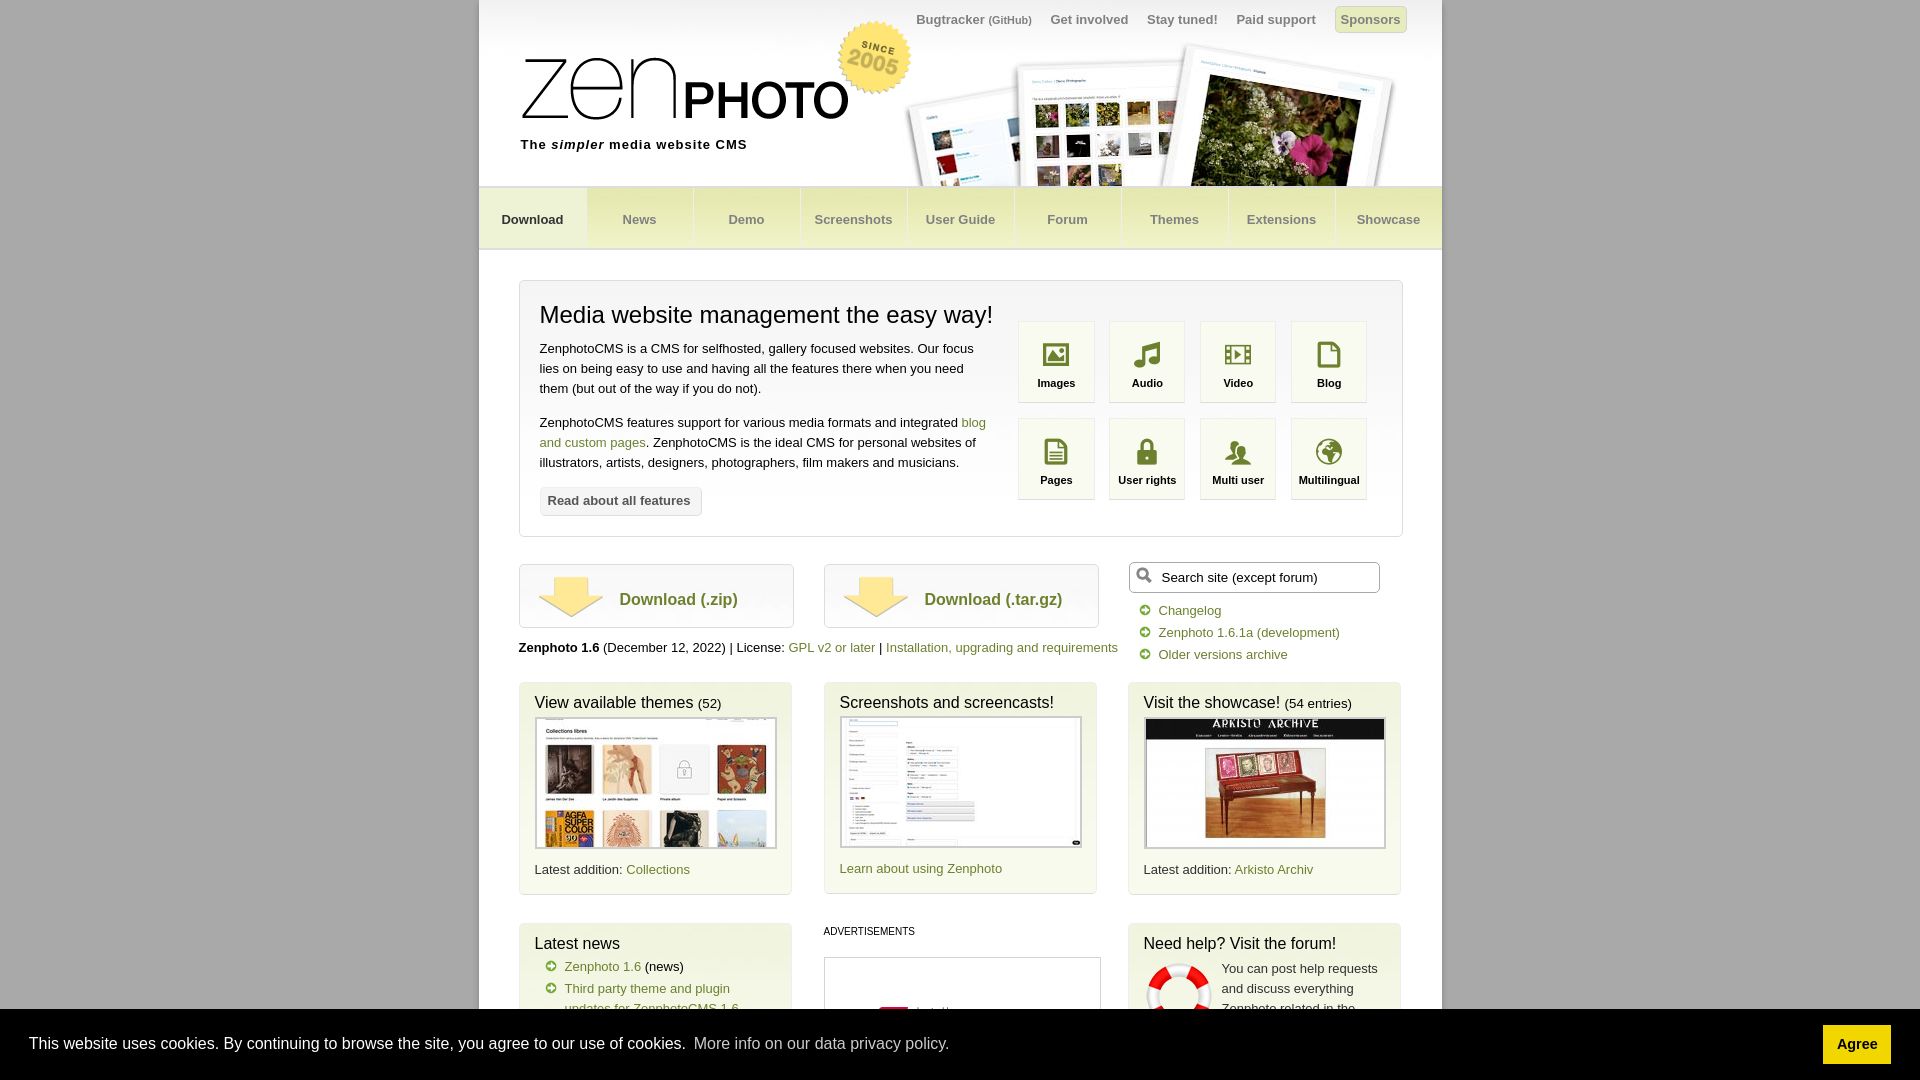 вебсайт zenphoto.org Є   ONLINE